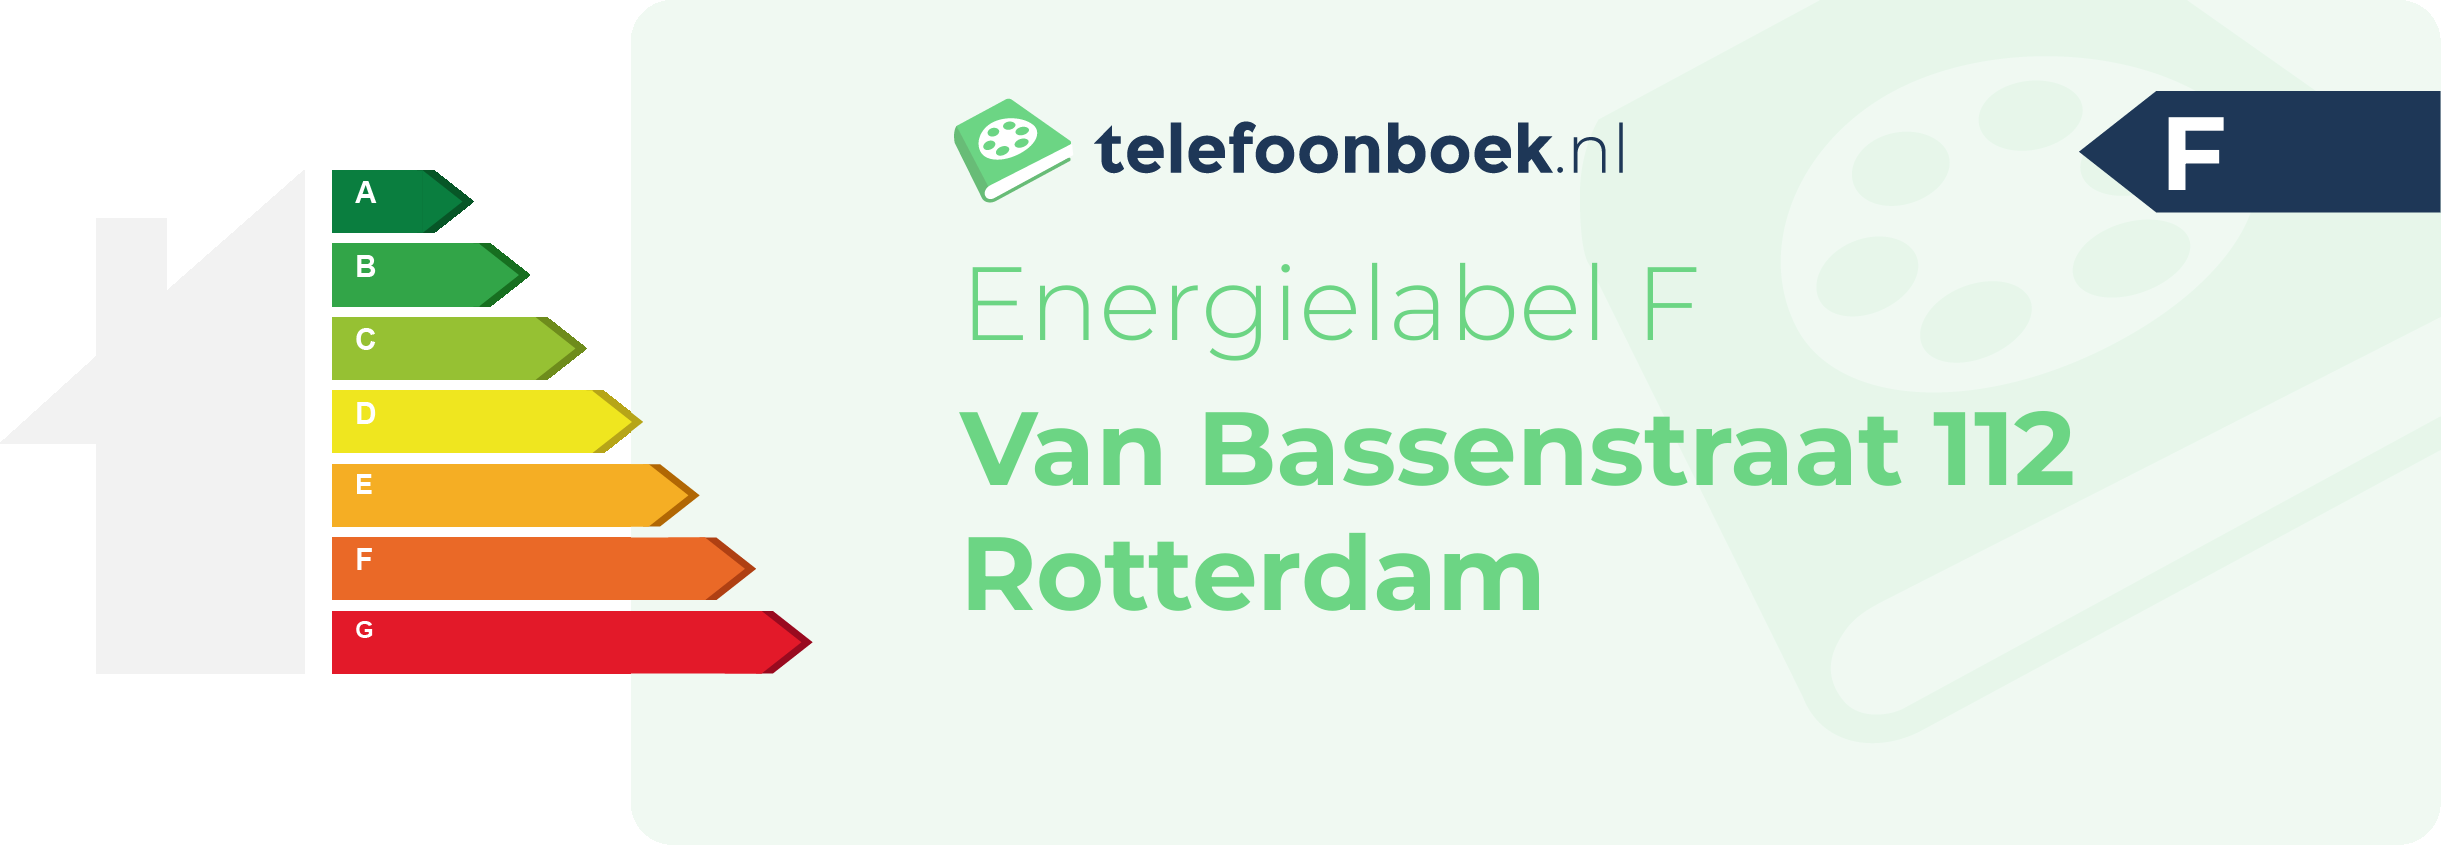 Energielabel Van Bassenstraat 112 Rotterdam